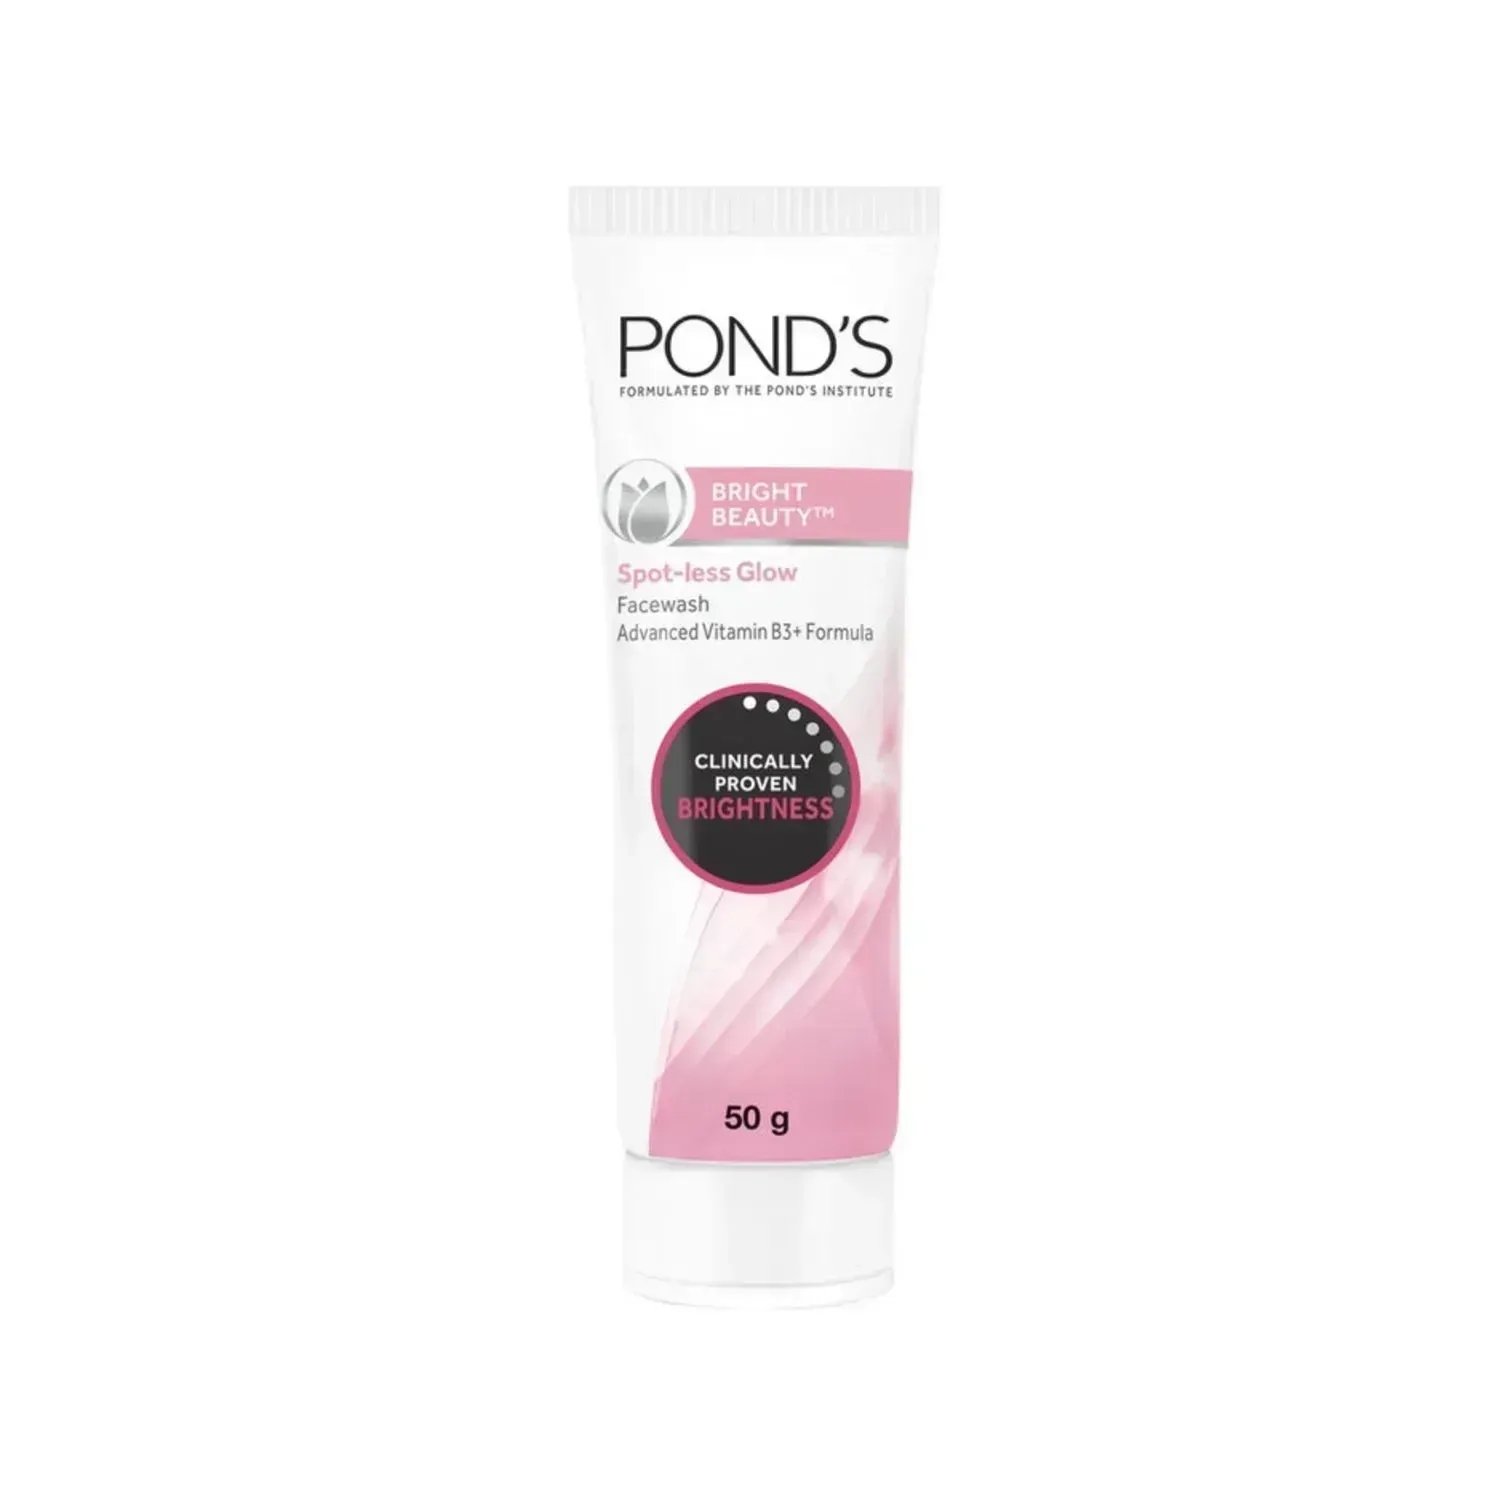 Pond's | Pond's Bright Beauty Spot-Less Glow Face Wash - (50g)